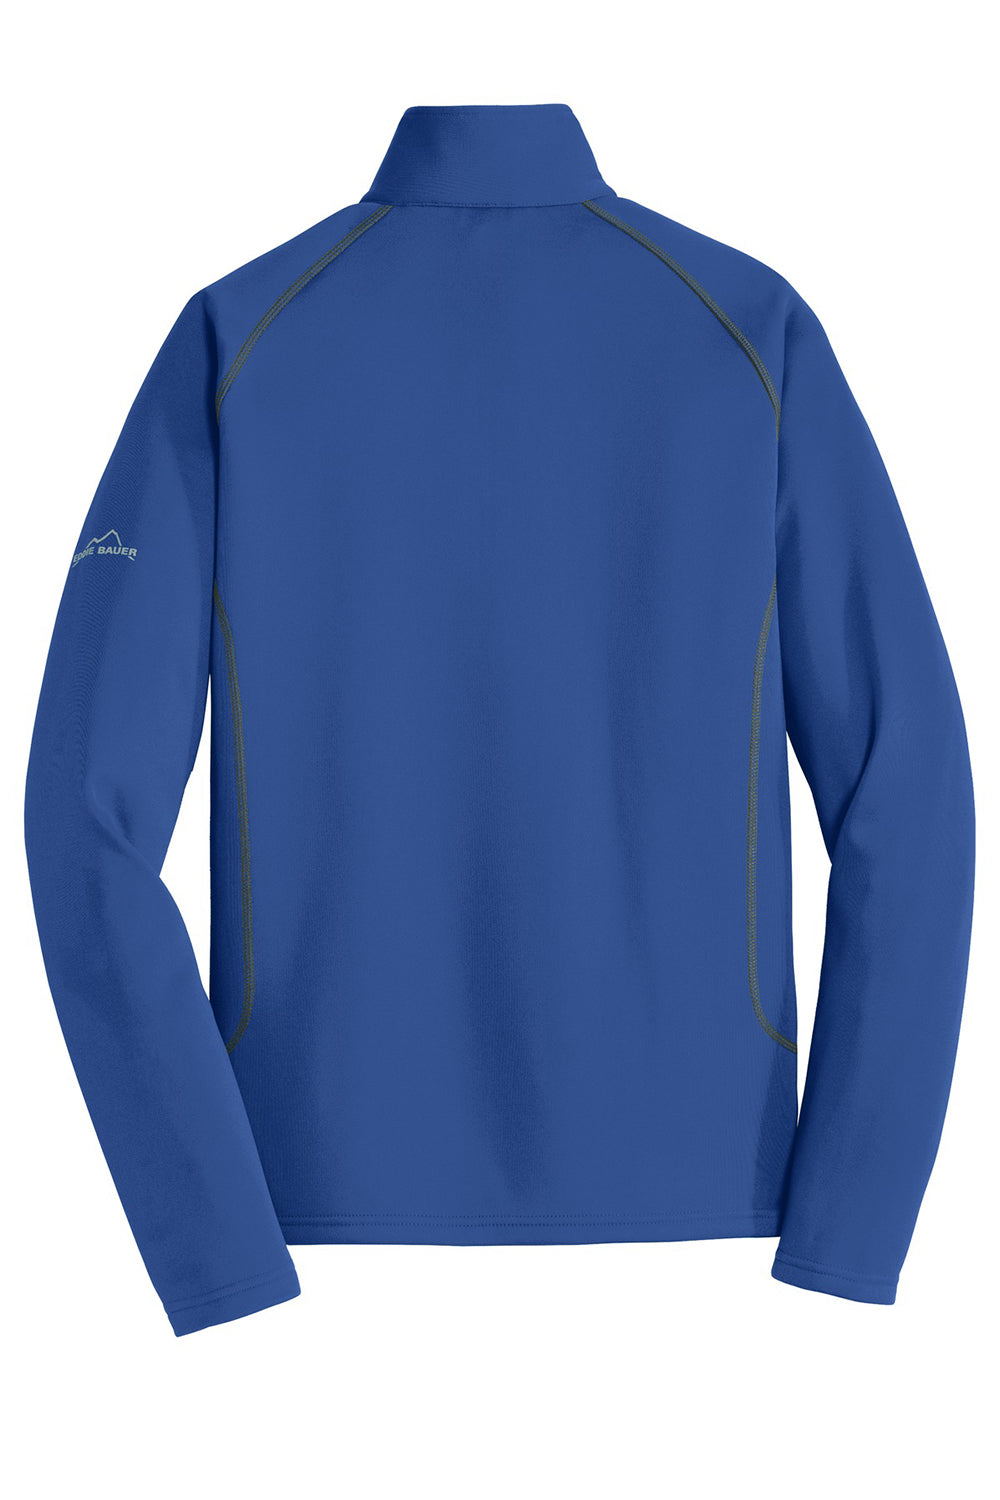 Eddie Bauer EB236 Mens Smooth Fleece 1/4 Zip Sweatshirt Cobalt Blue Flat Back